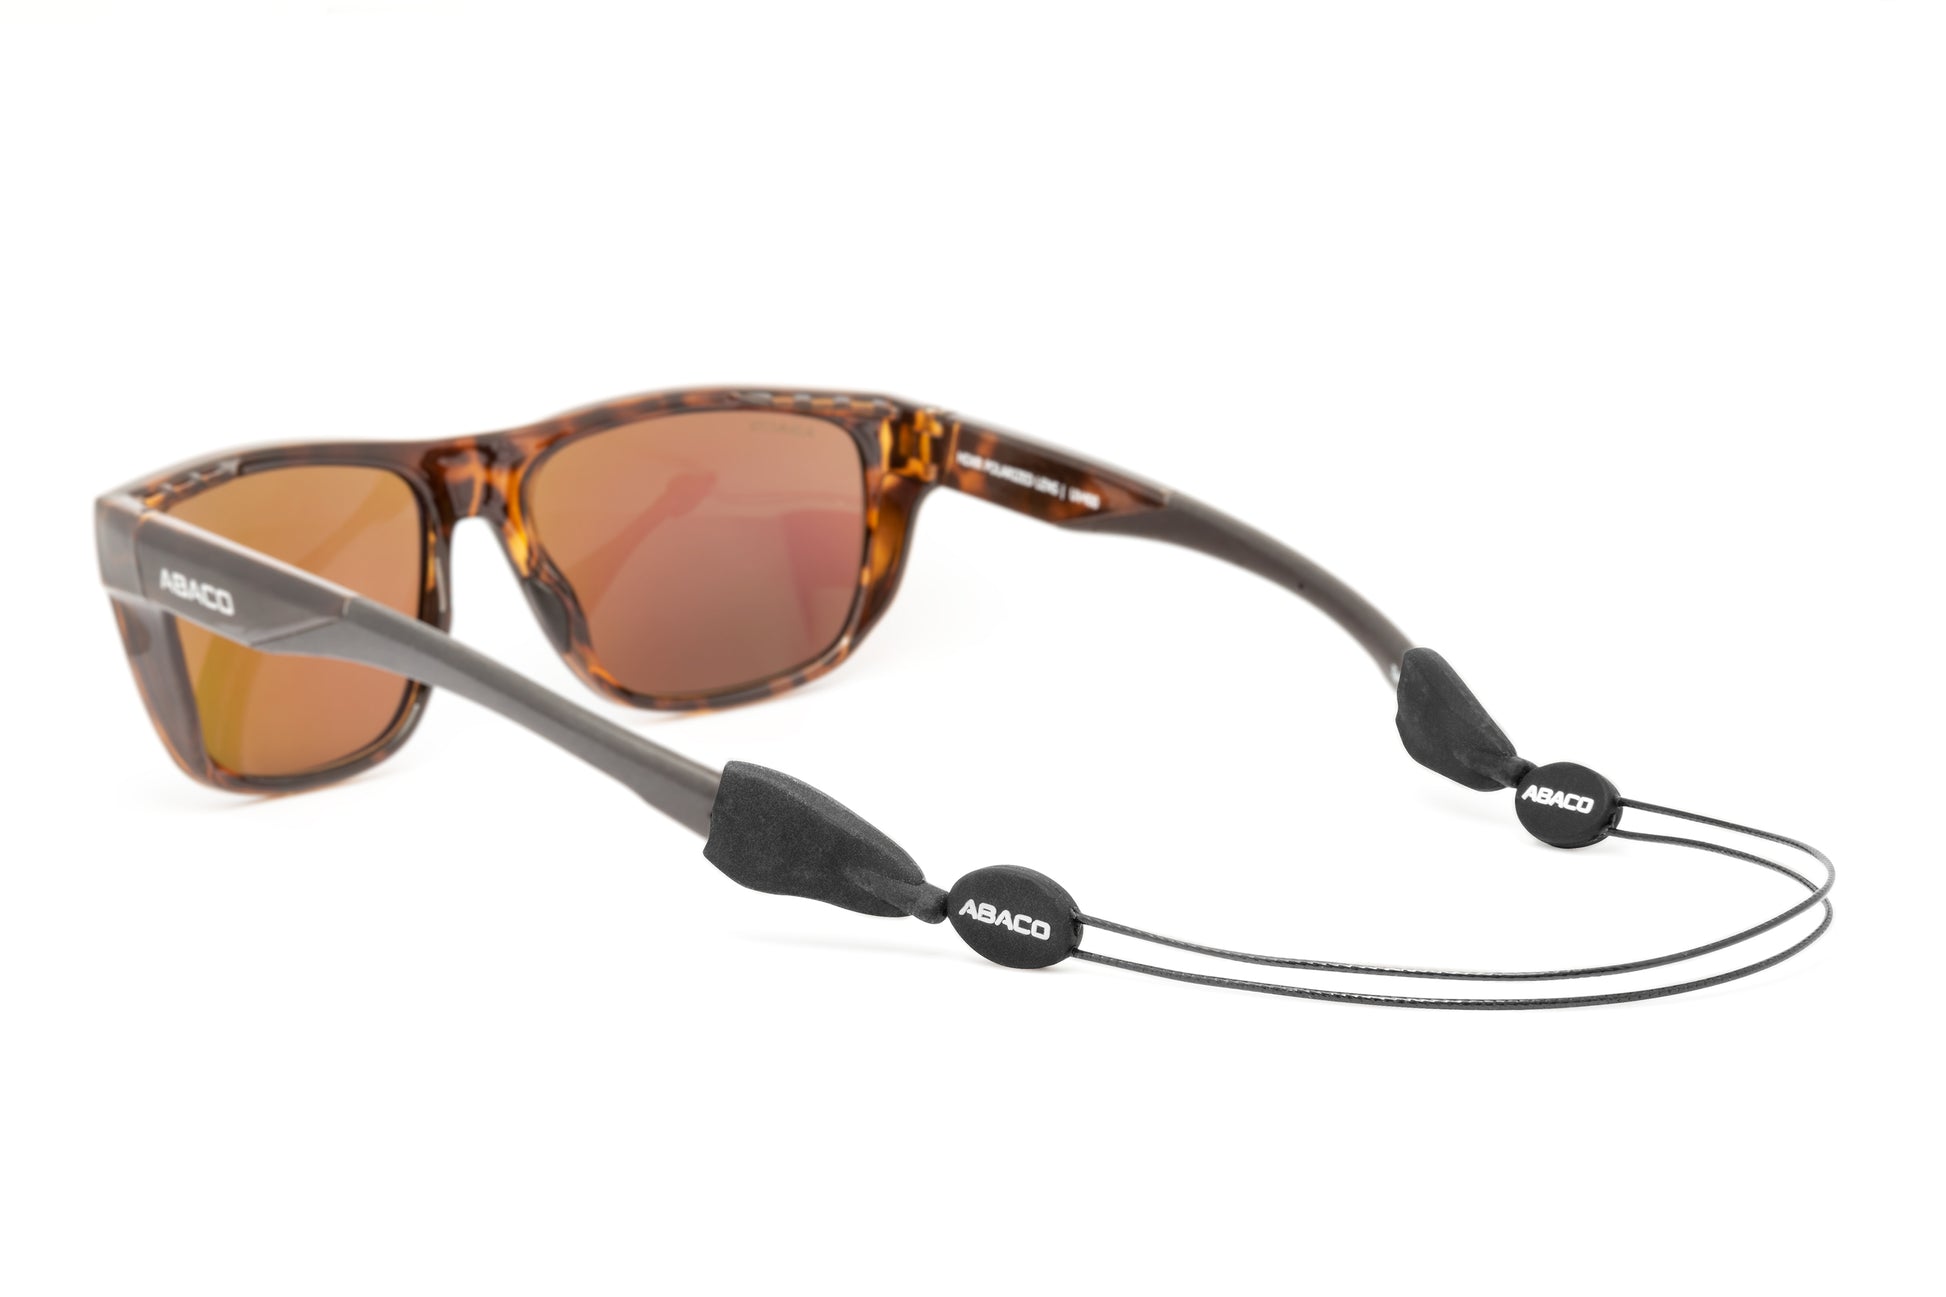 Sunglasses Retainer Magnetic Adjustable Silicone Sunglasses Rope